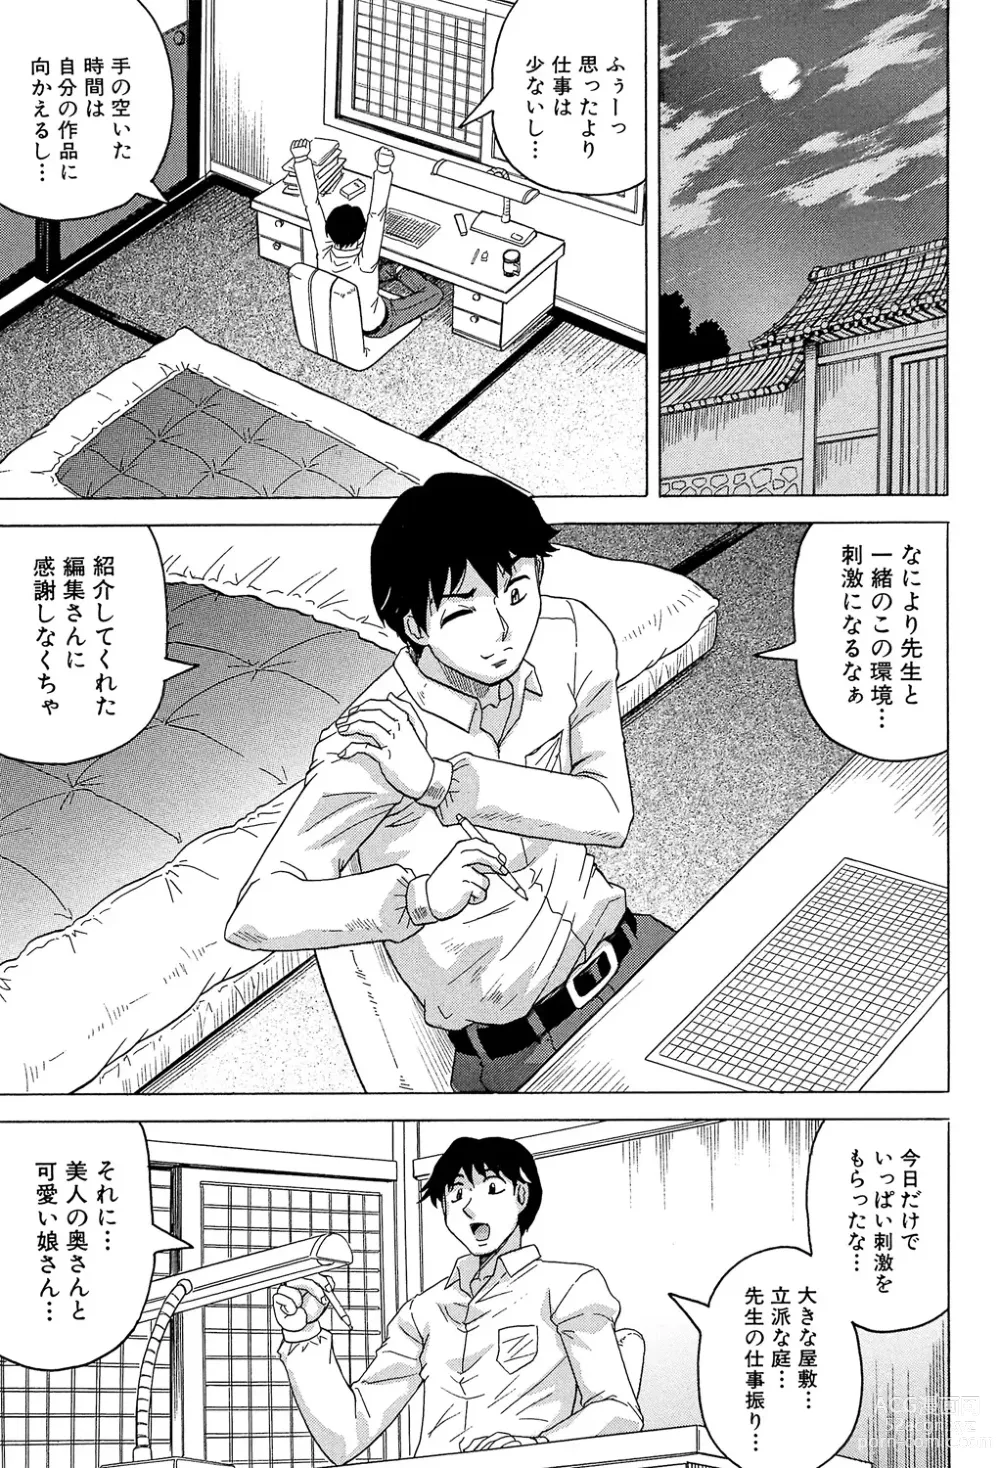 Page 15 of manga Oyako no Utage